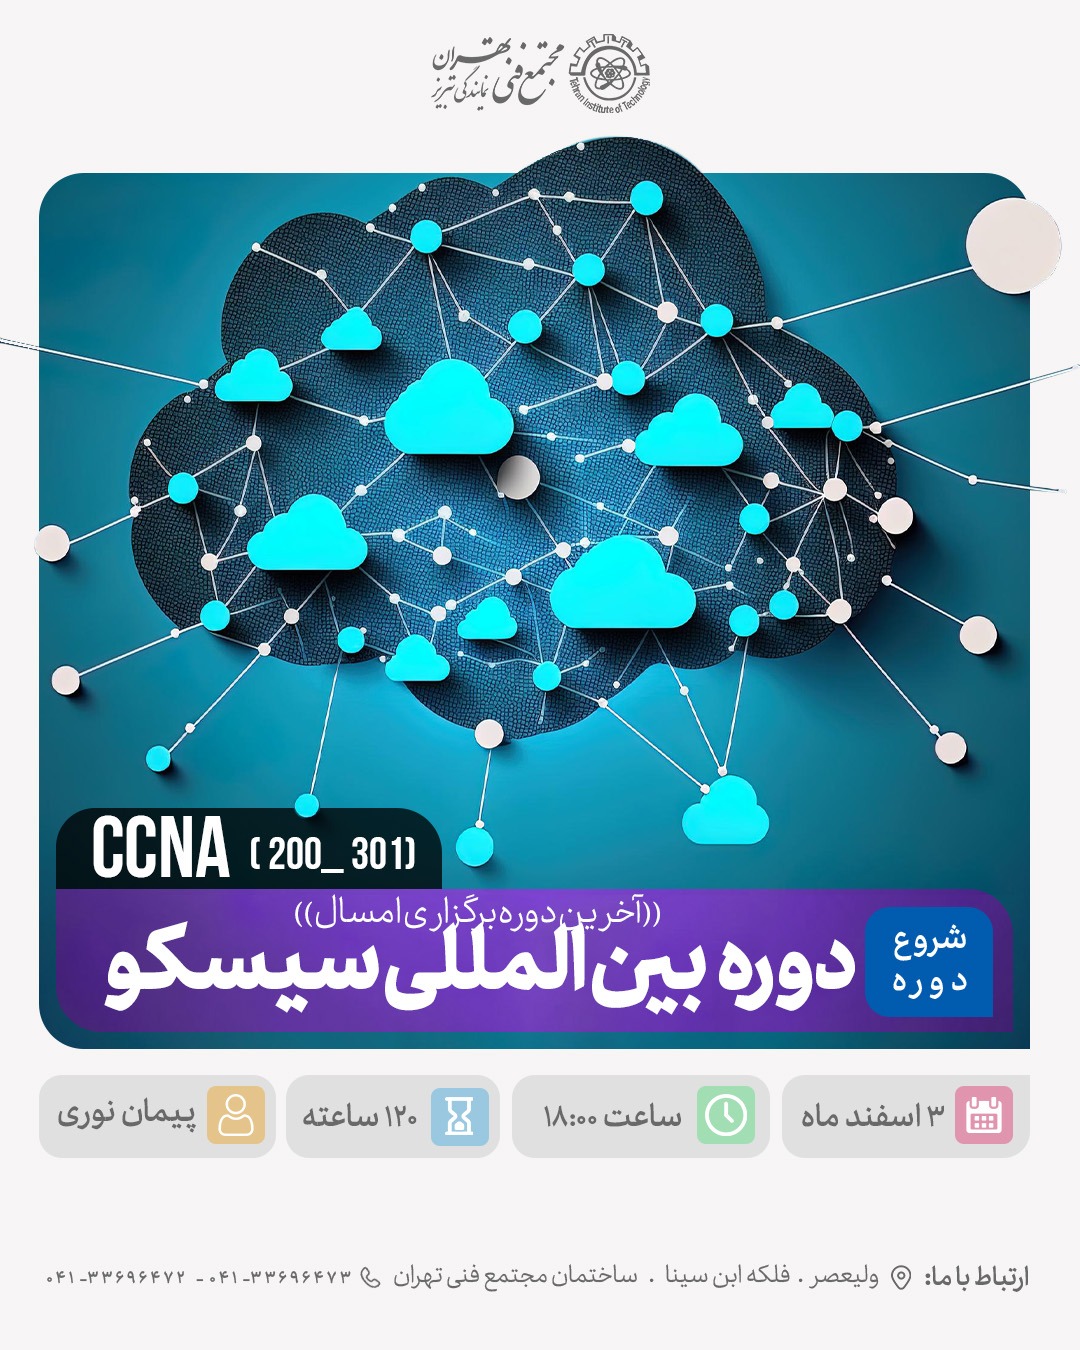 CCNA(200-301)